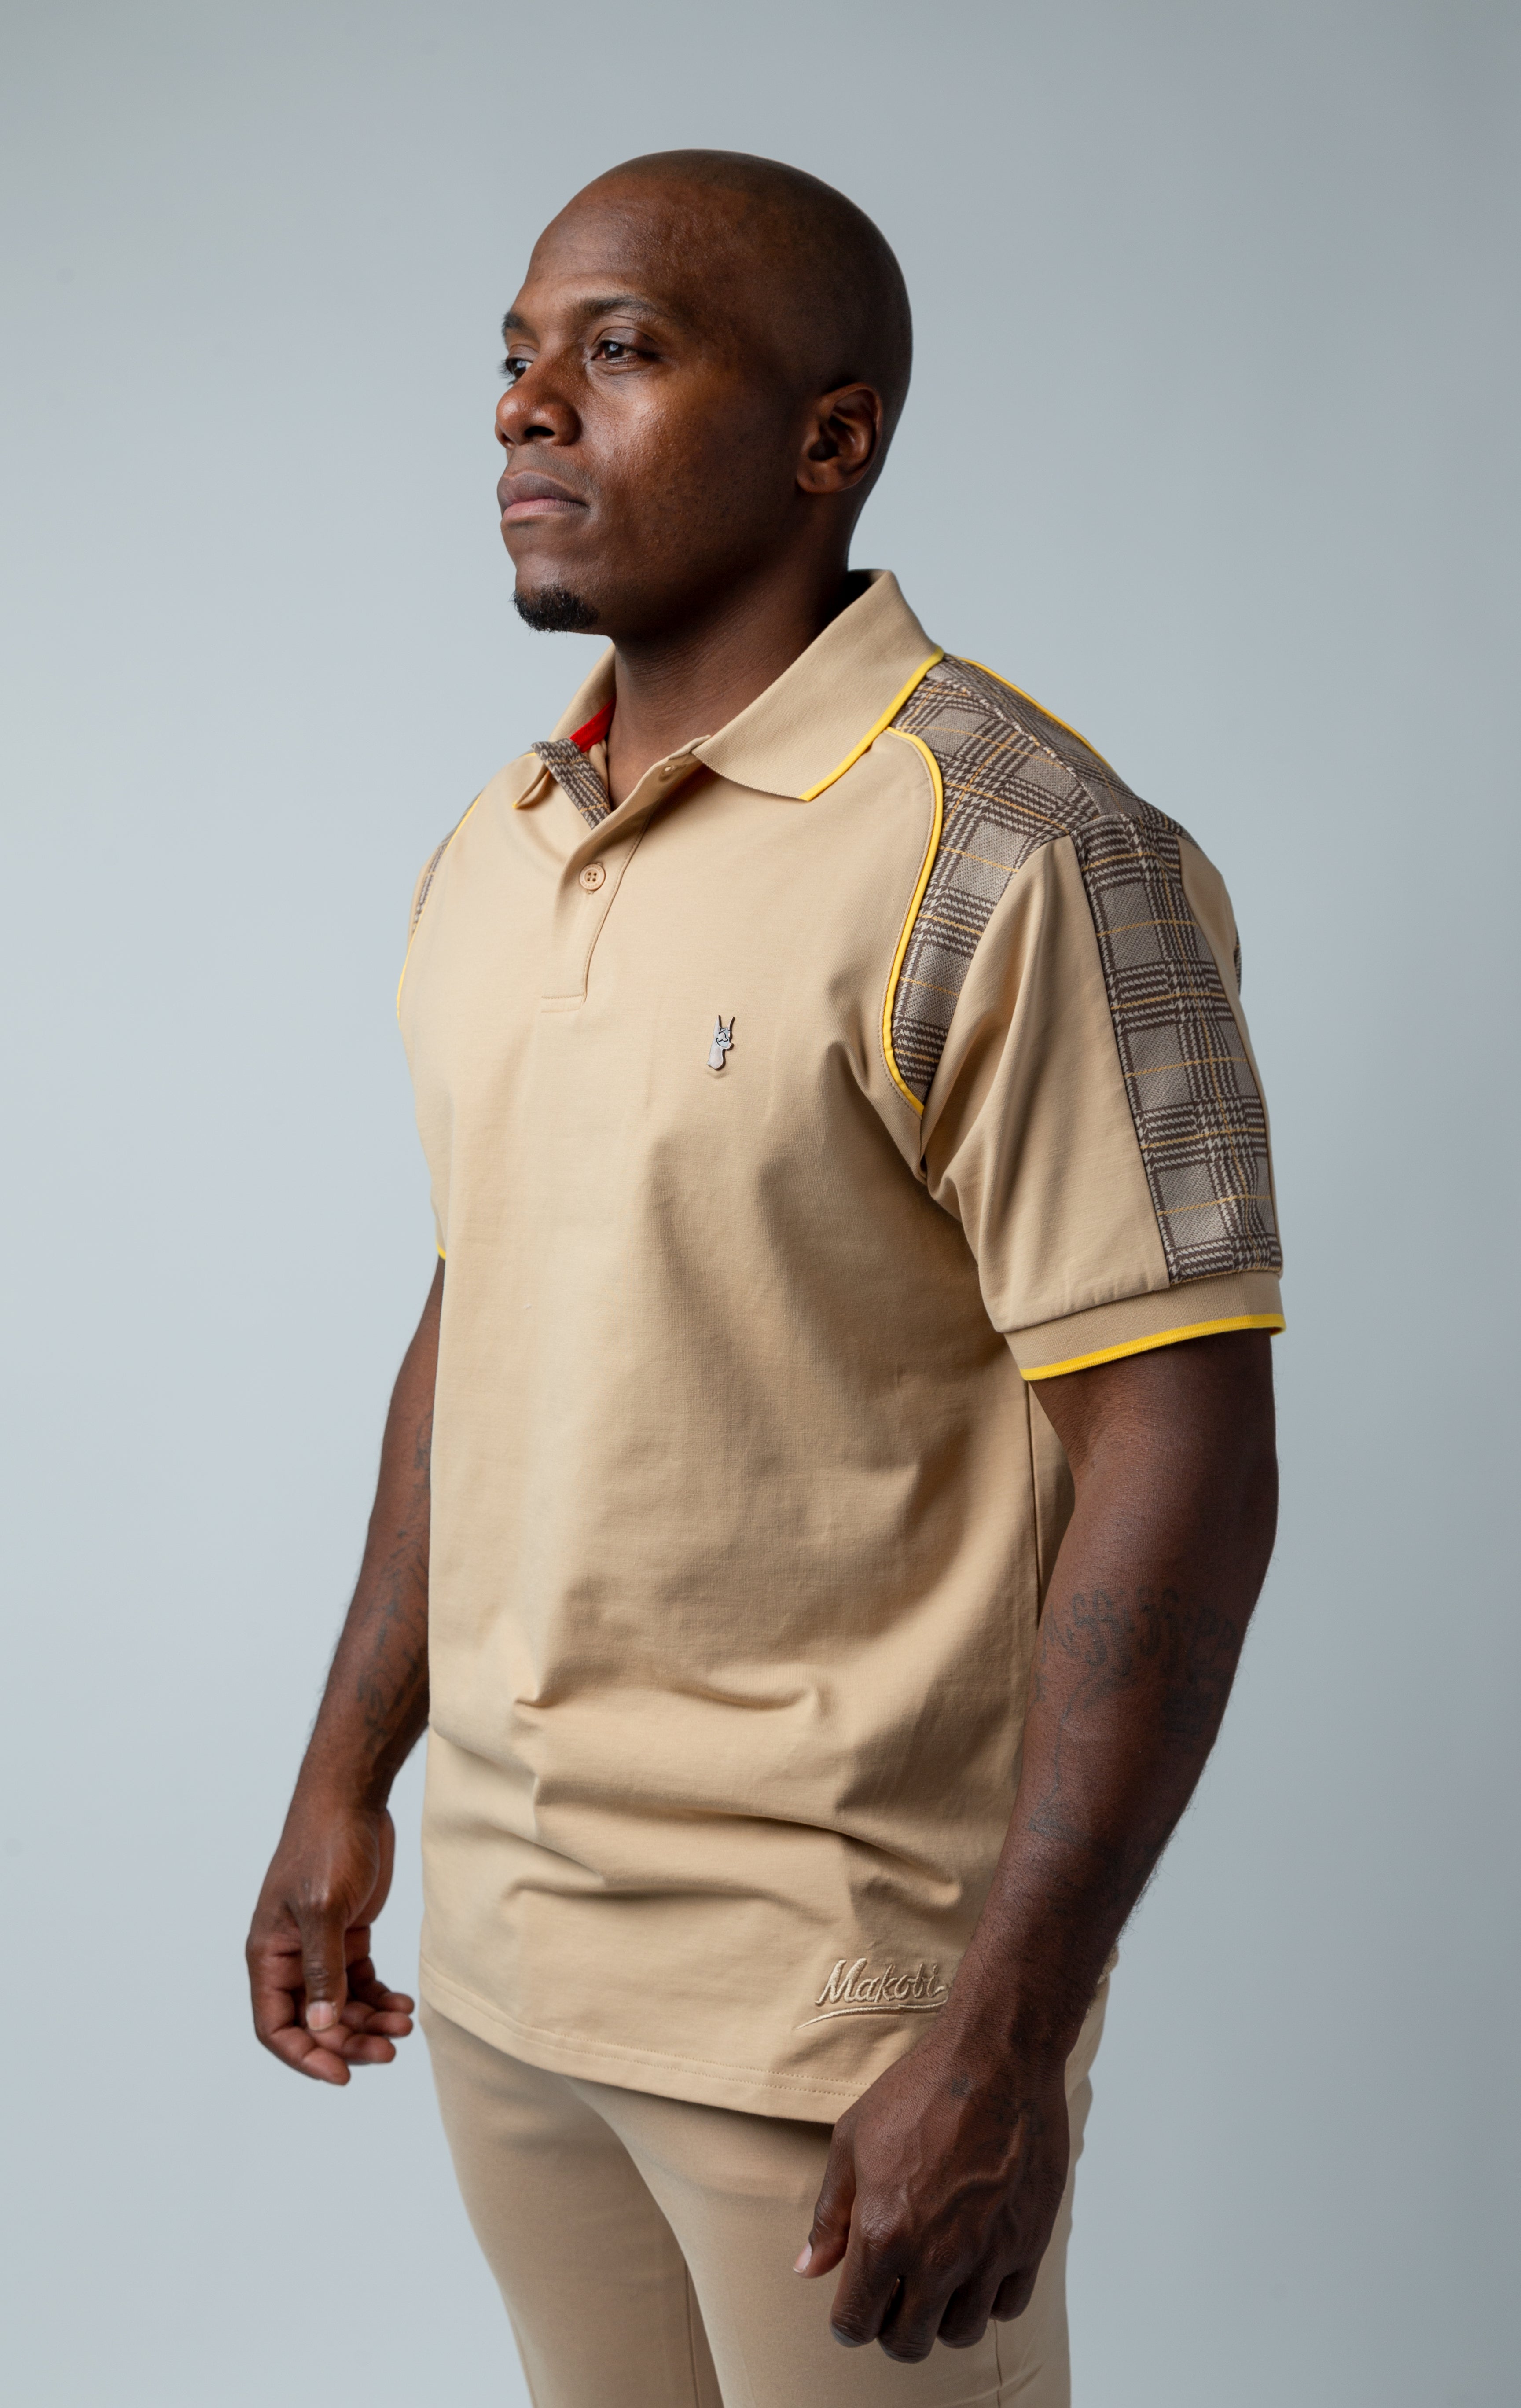 Khaki Polo shirts featuring a distinctive plaid yoke